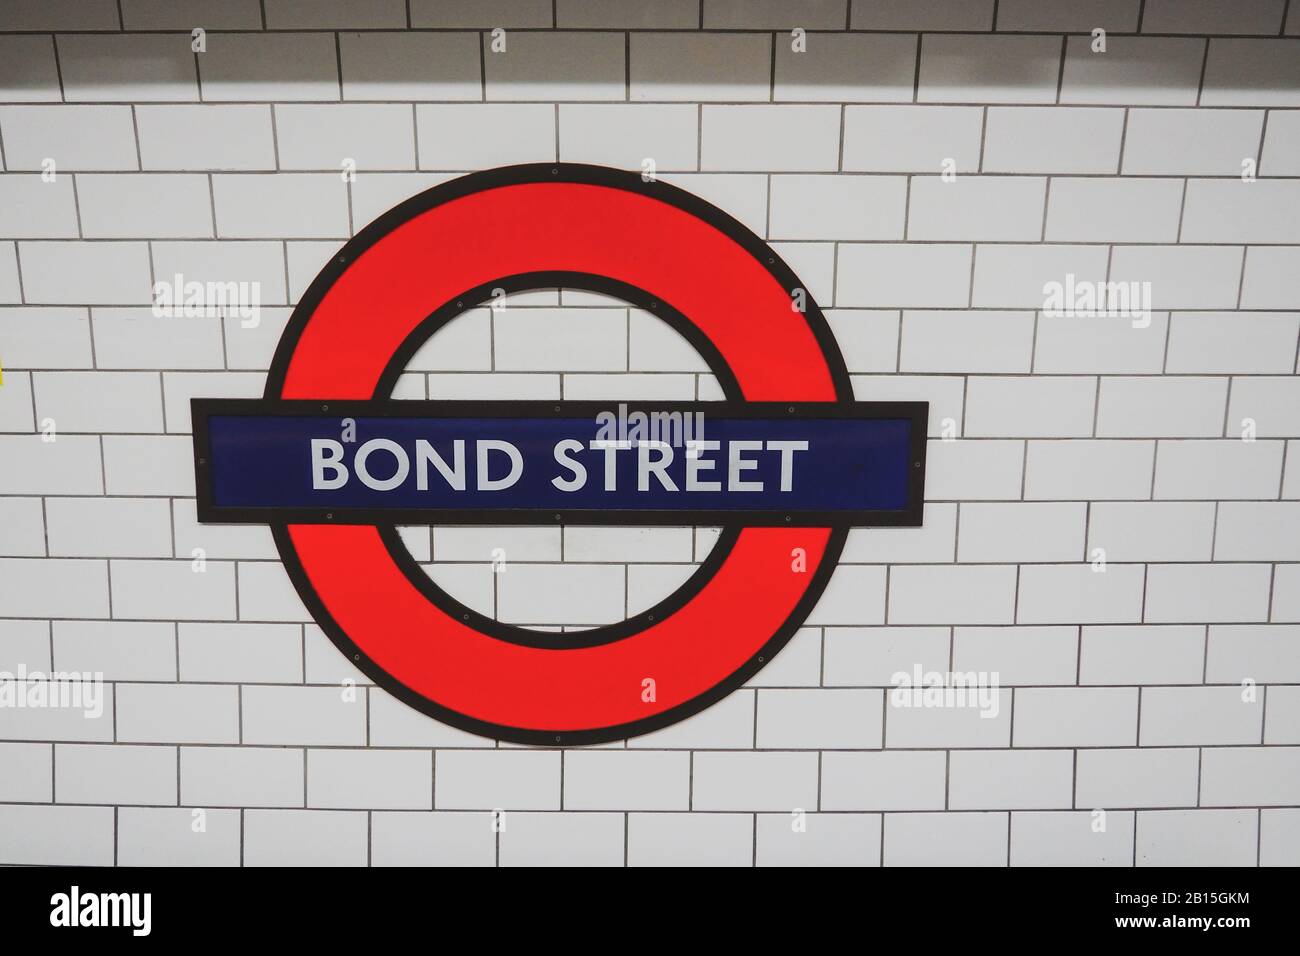 London underground, tube interior Stock Photo - Alamy